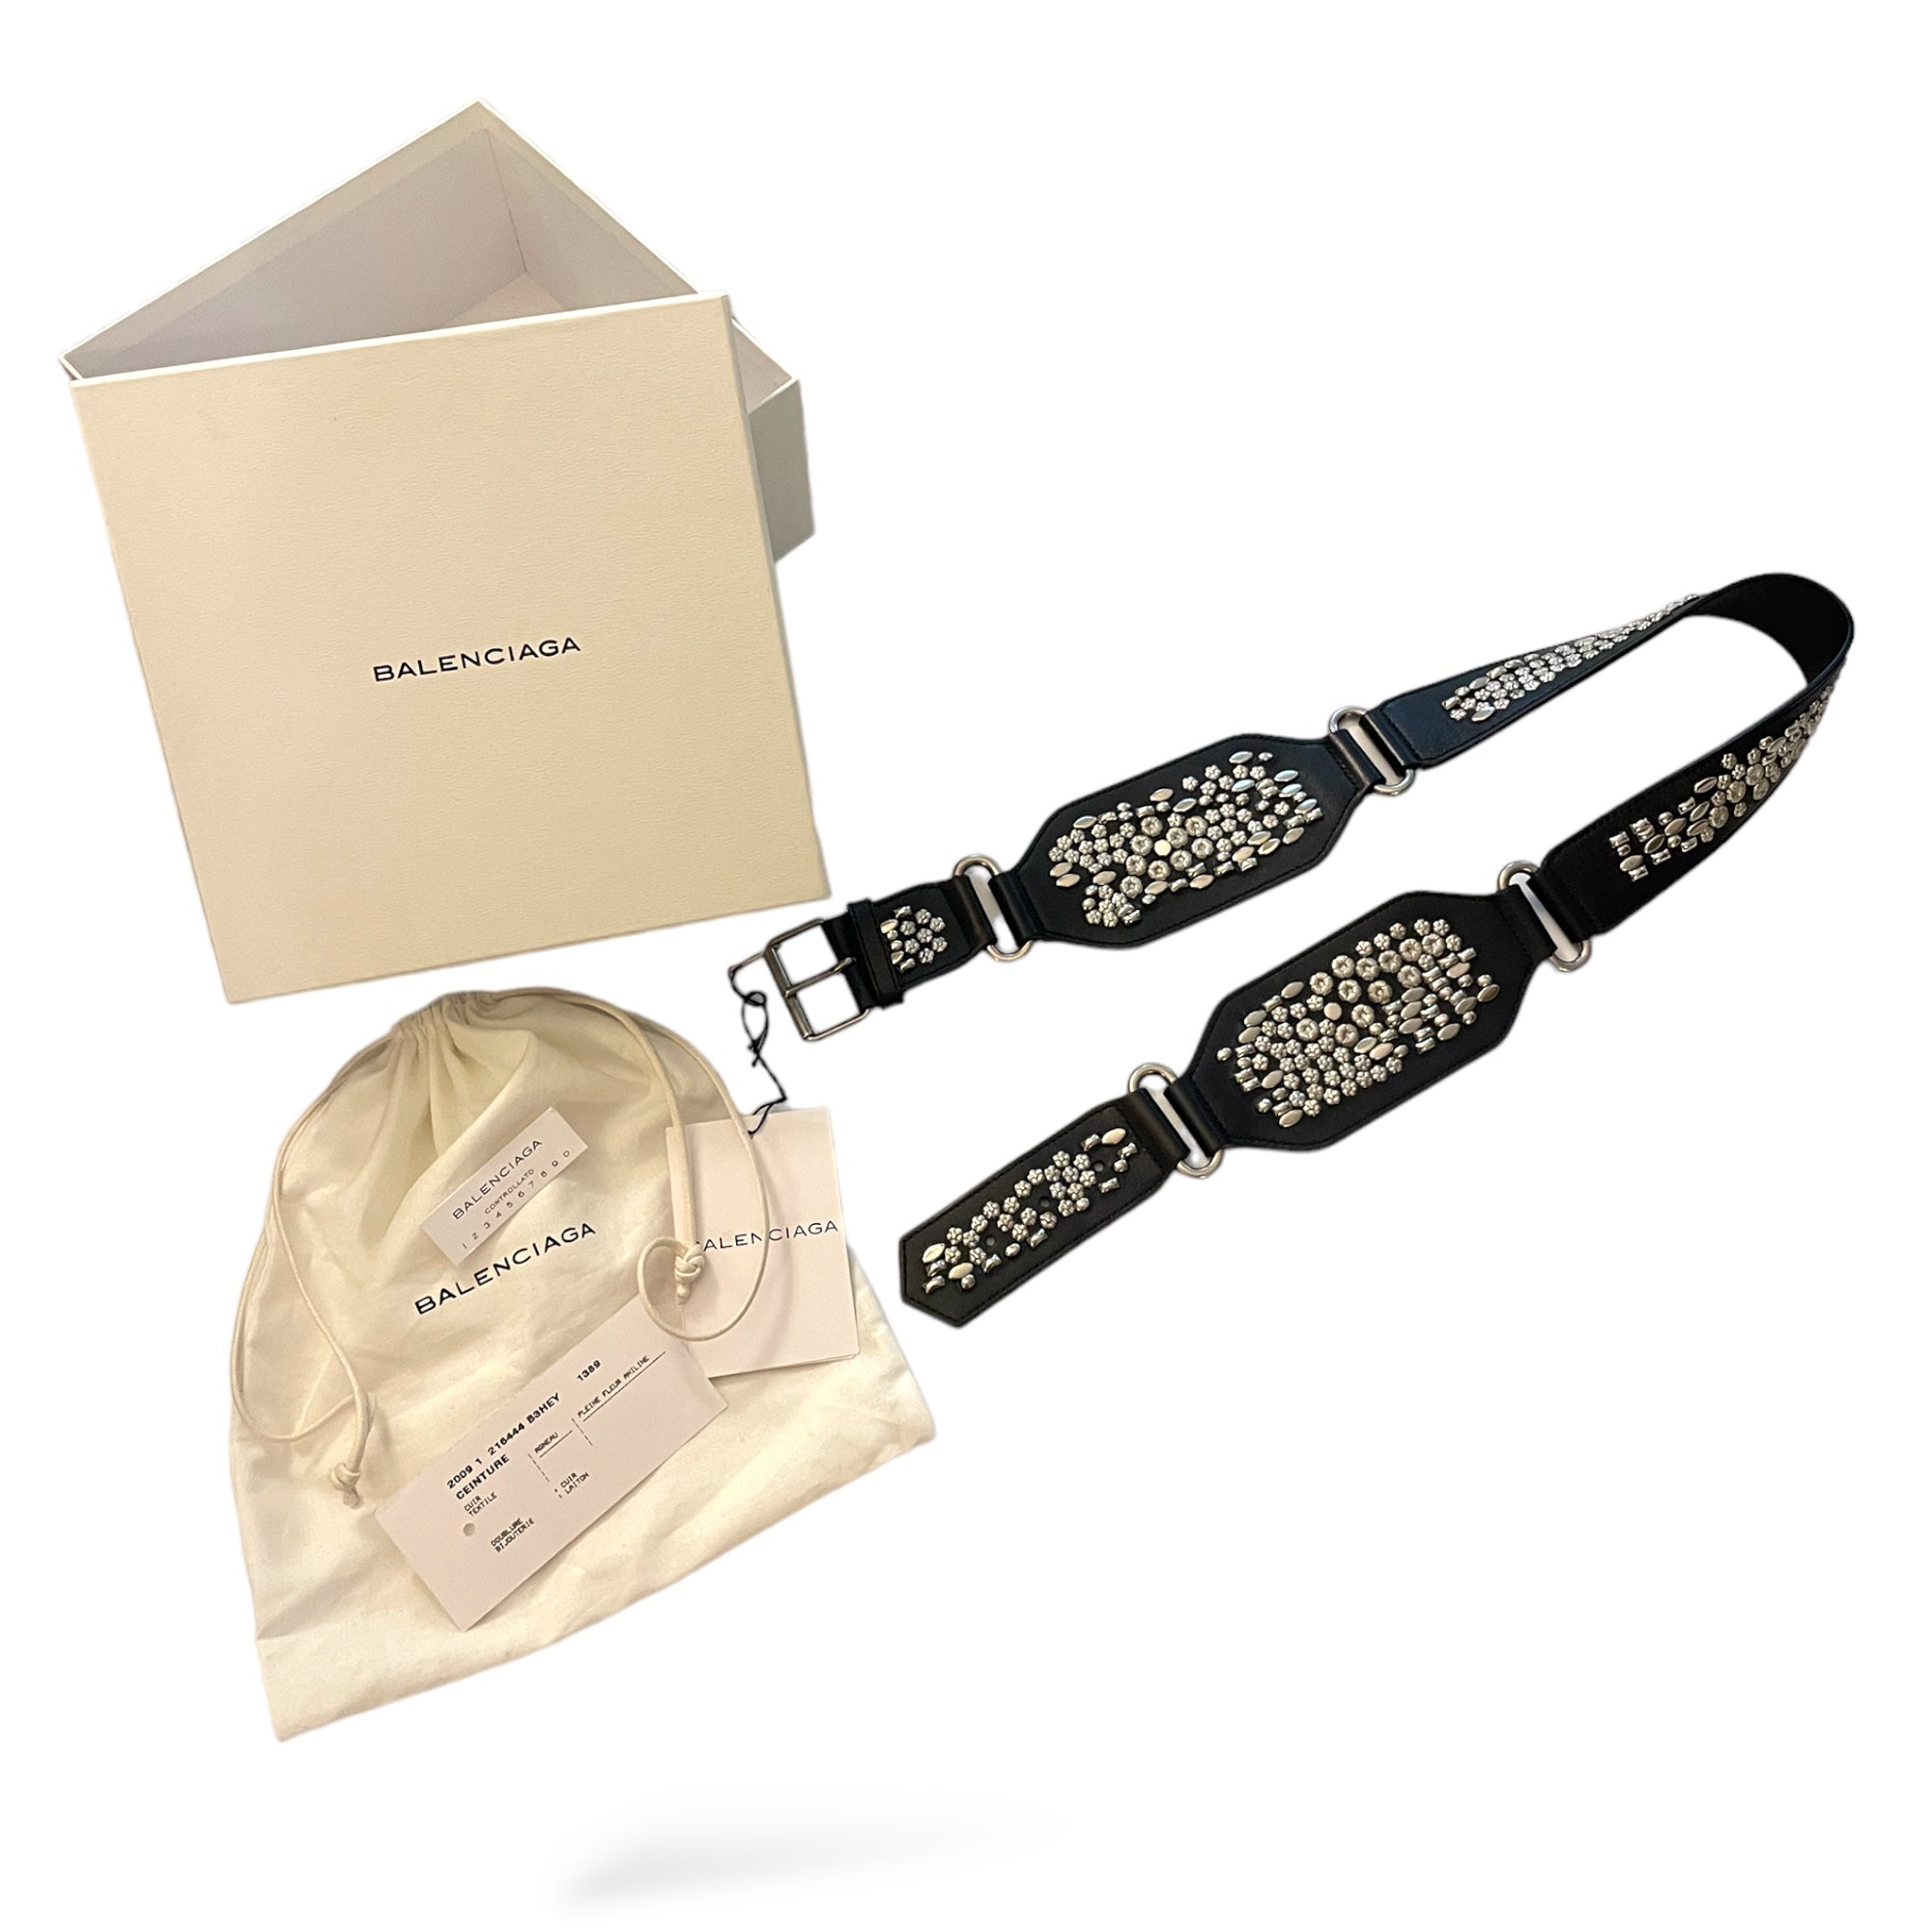 BALENCIAGA PARIS Black Leather Belt with Silver Grommet Accents |SIZE: 85/34|